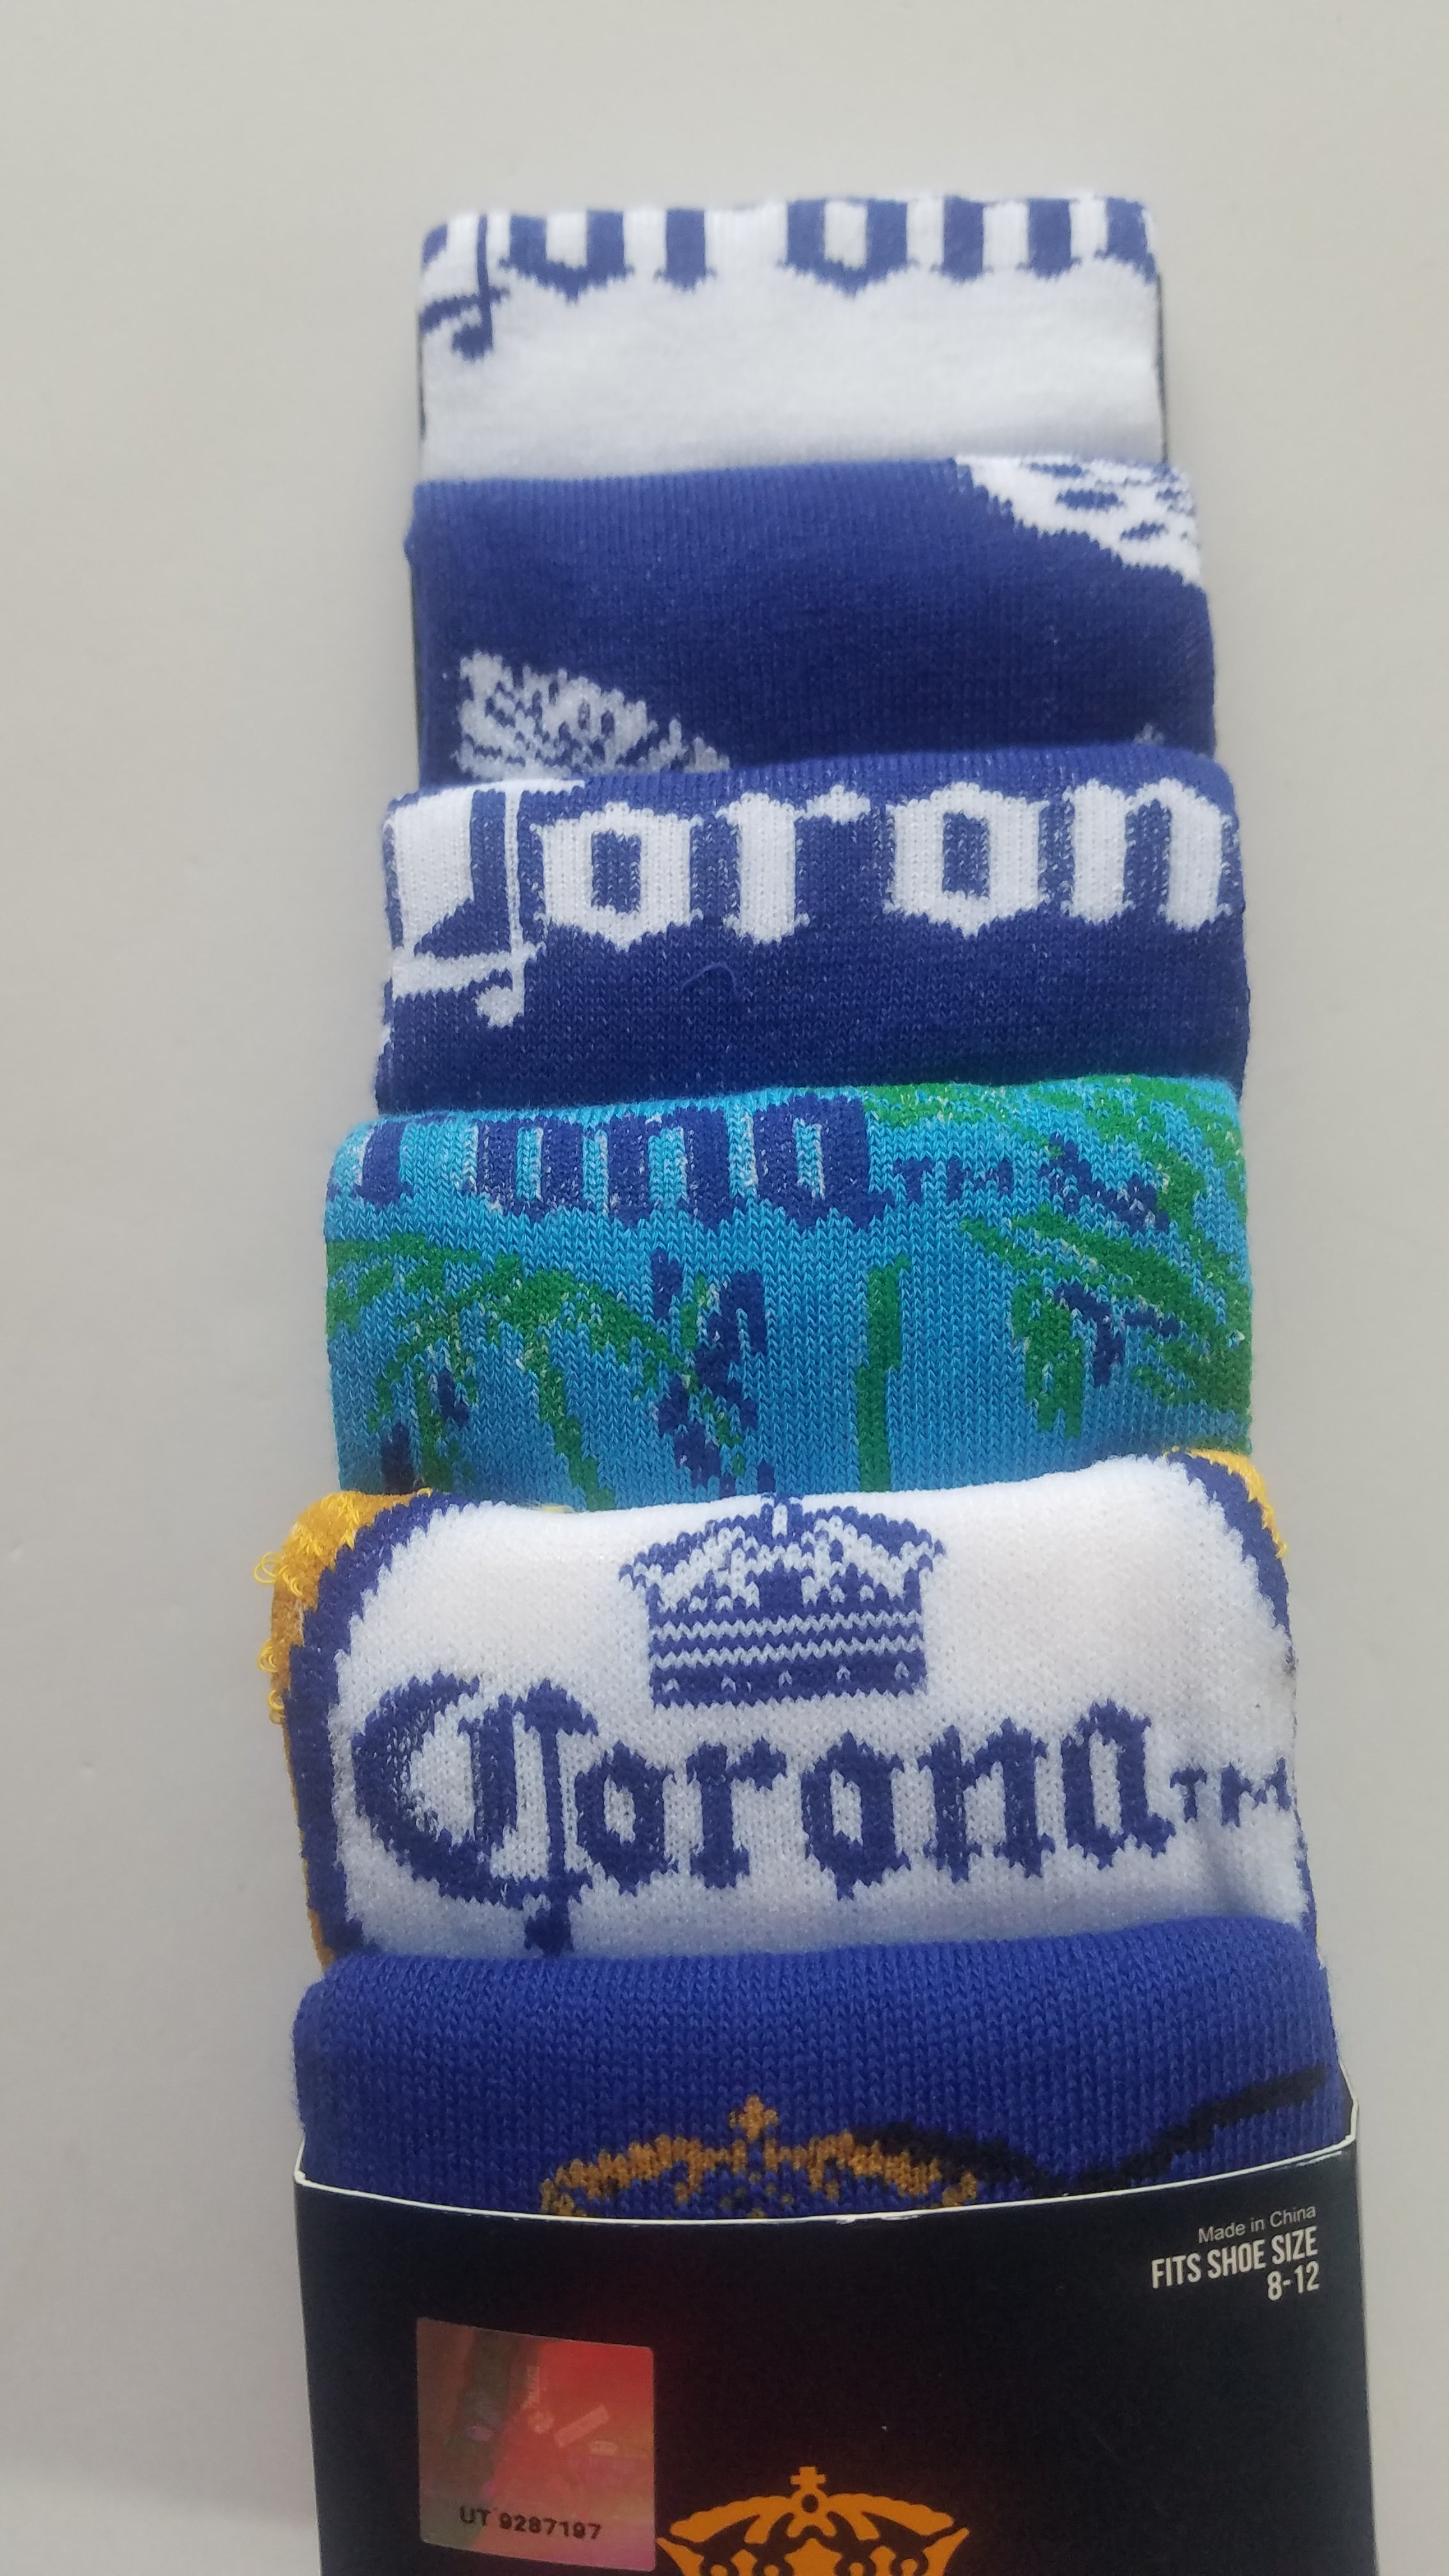 Corona beer Mens casual crew socks 6 pair shoe size 8 12 new in package